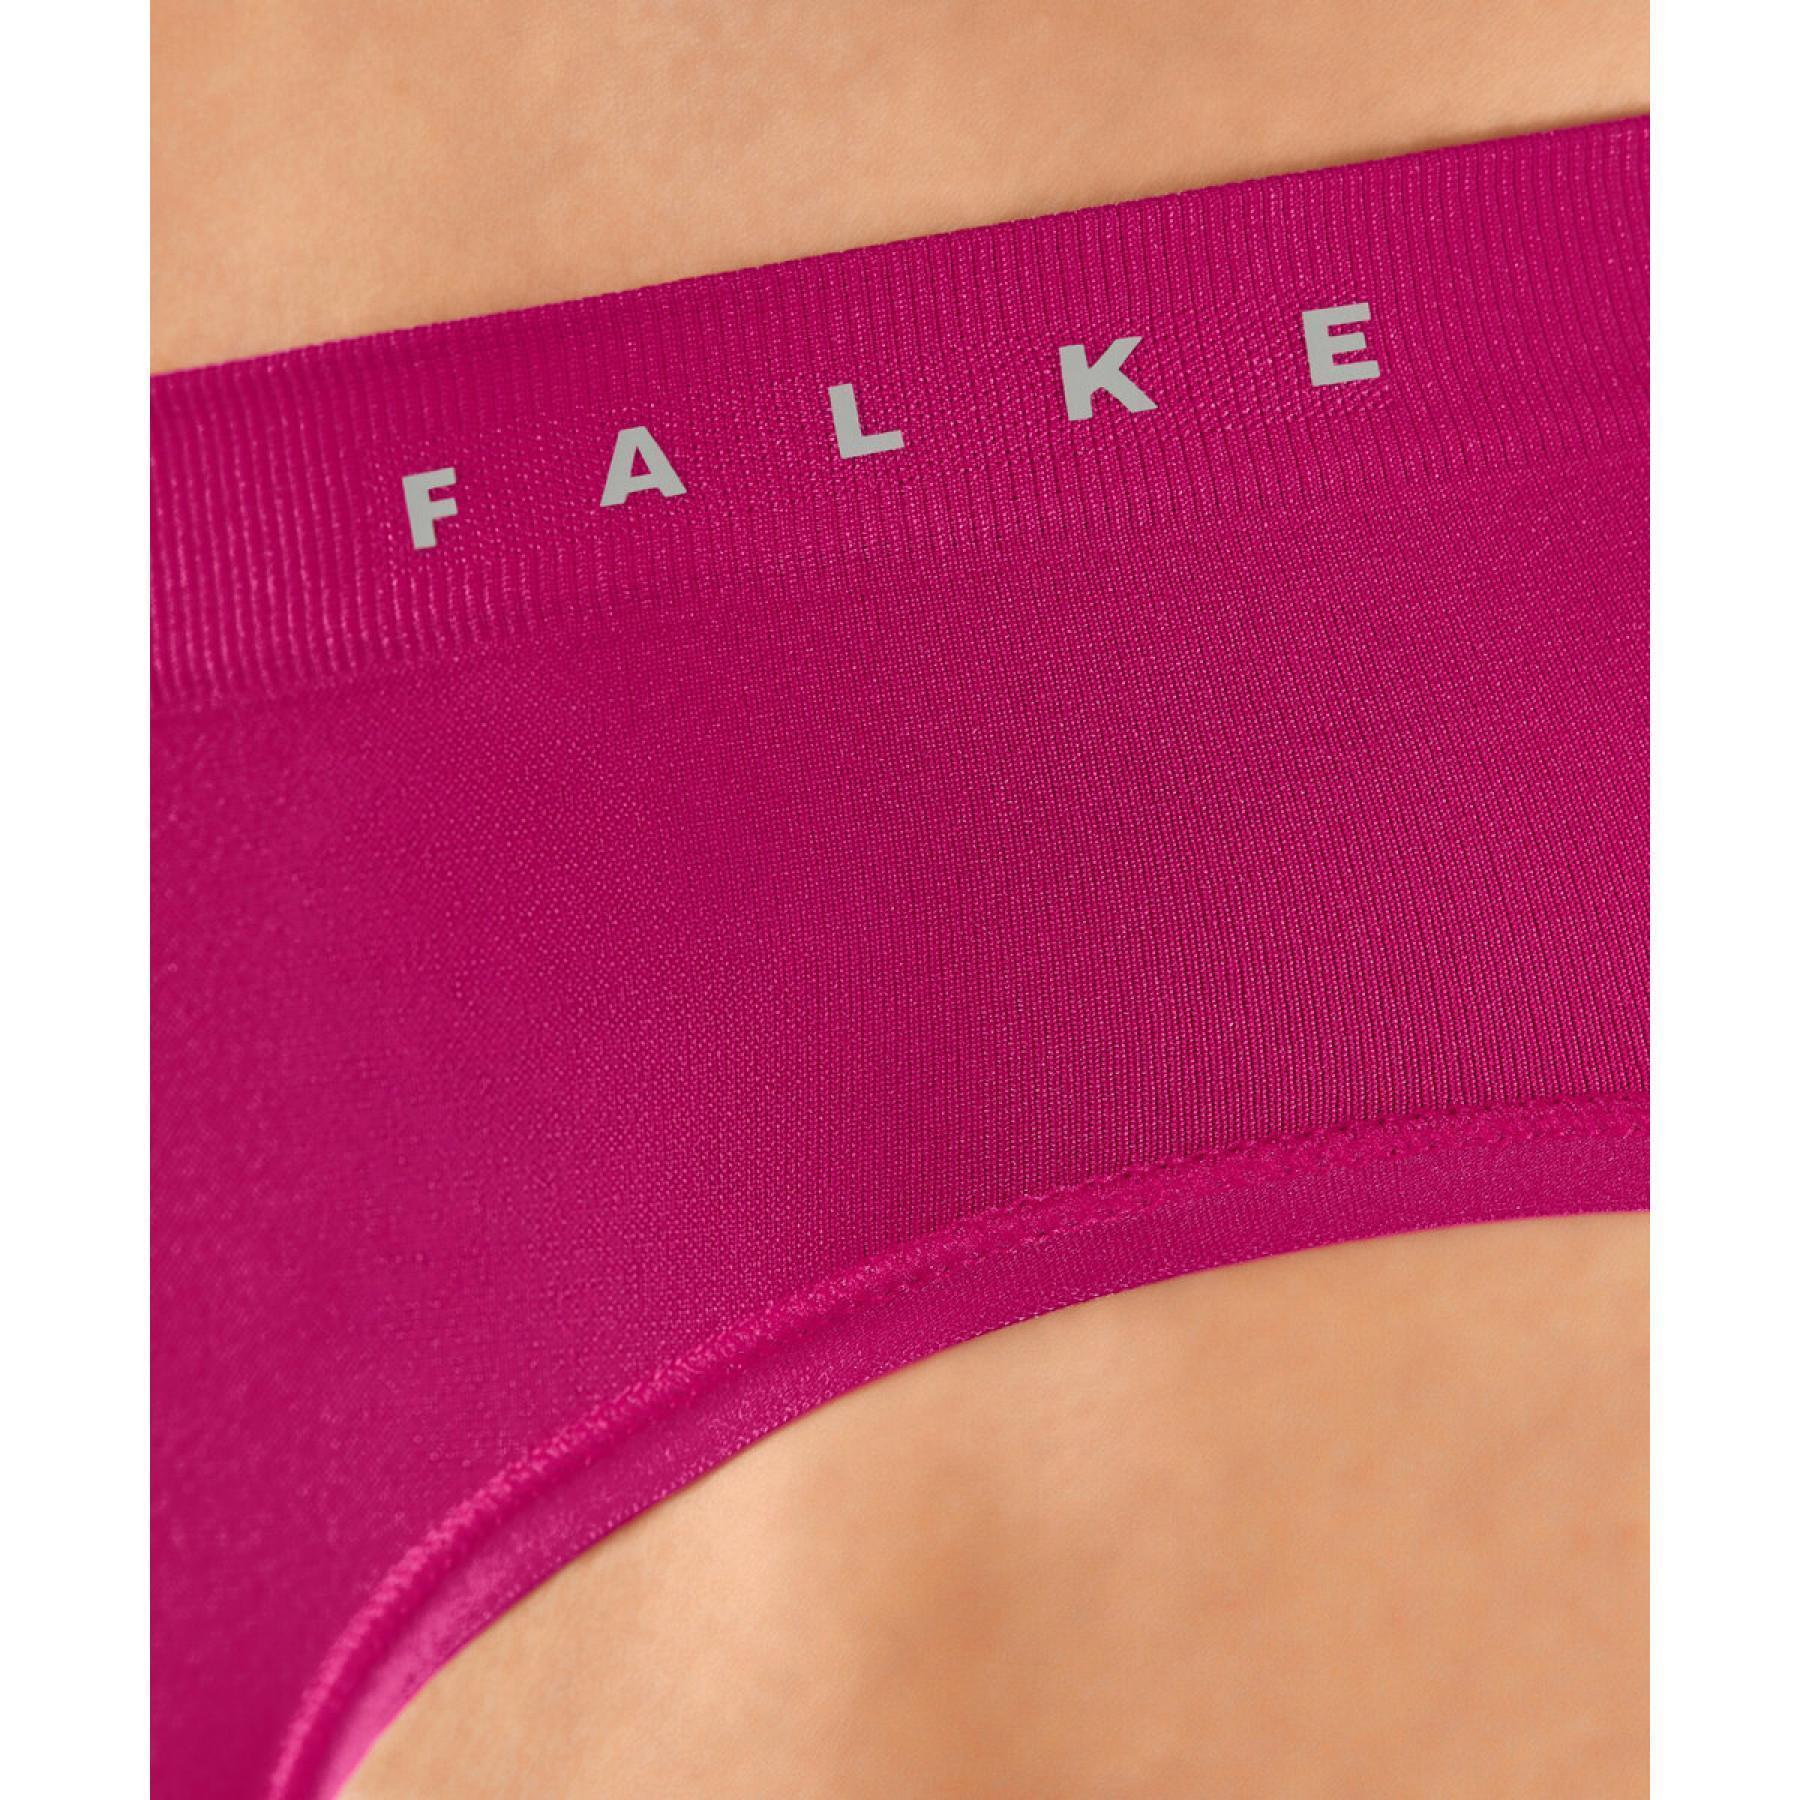 Women's panties Falke Cool